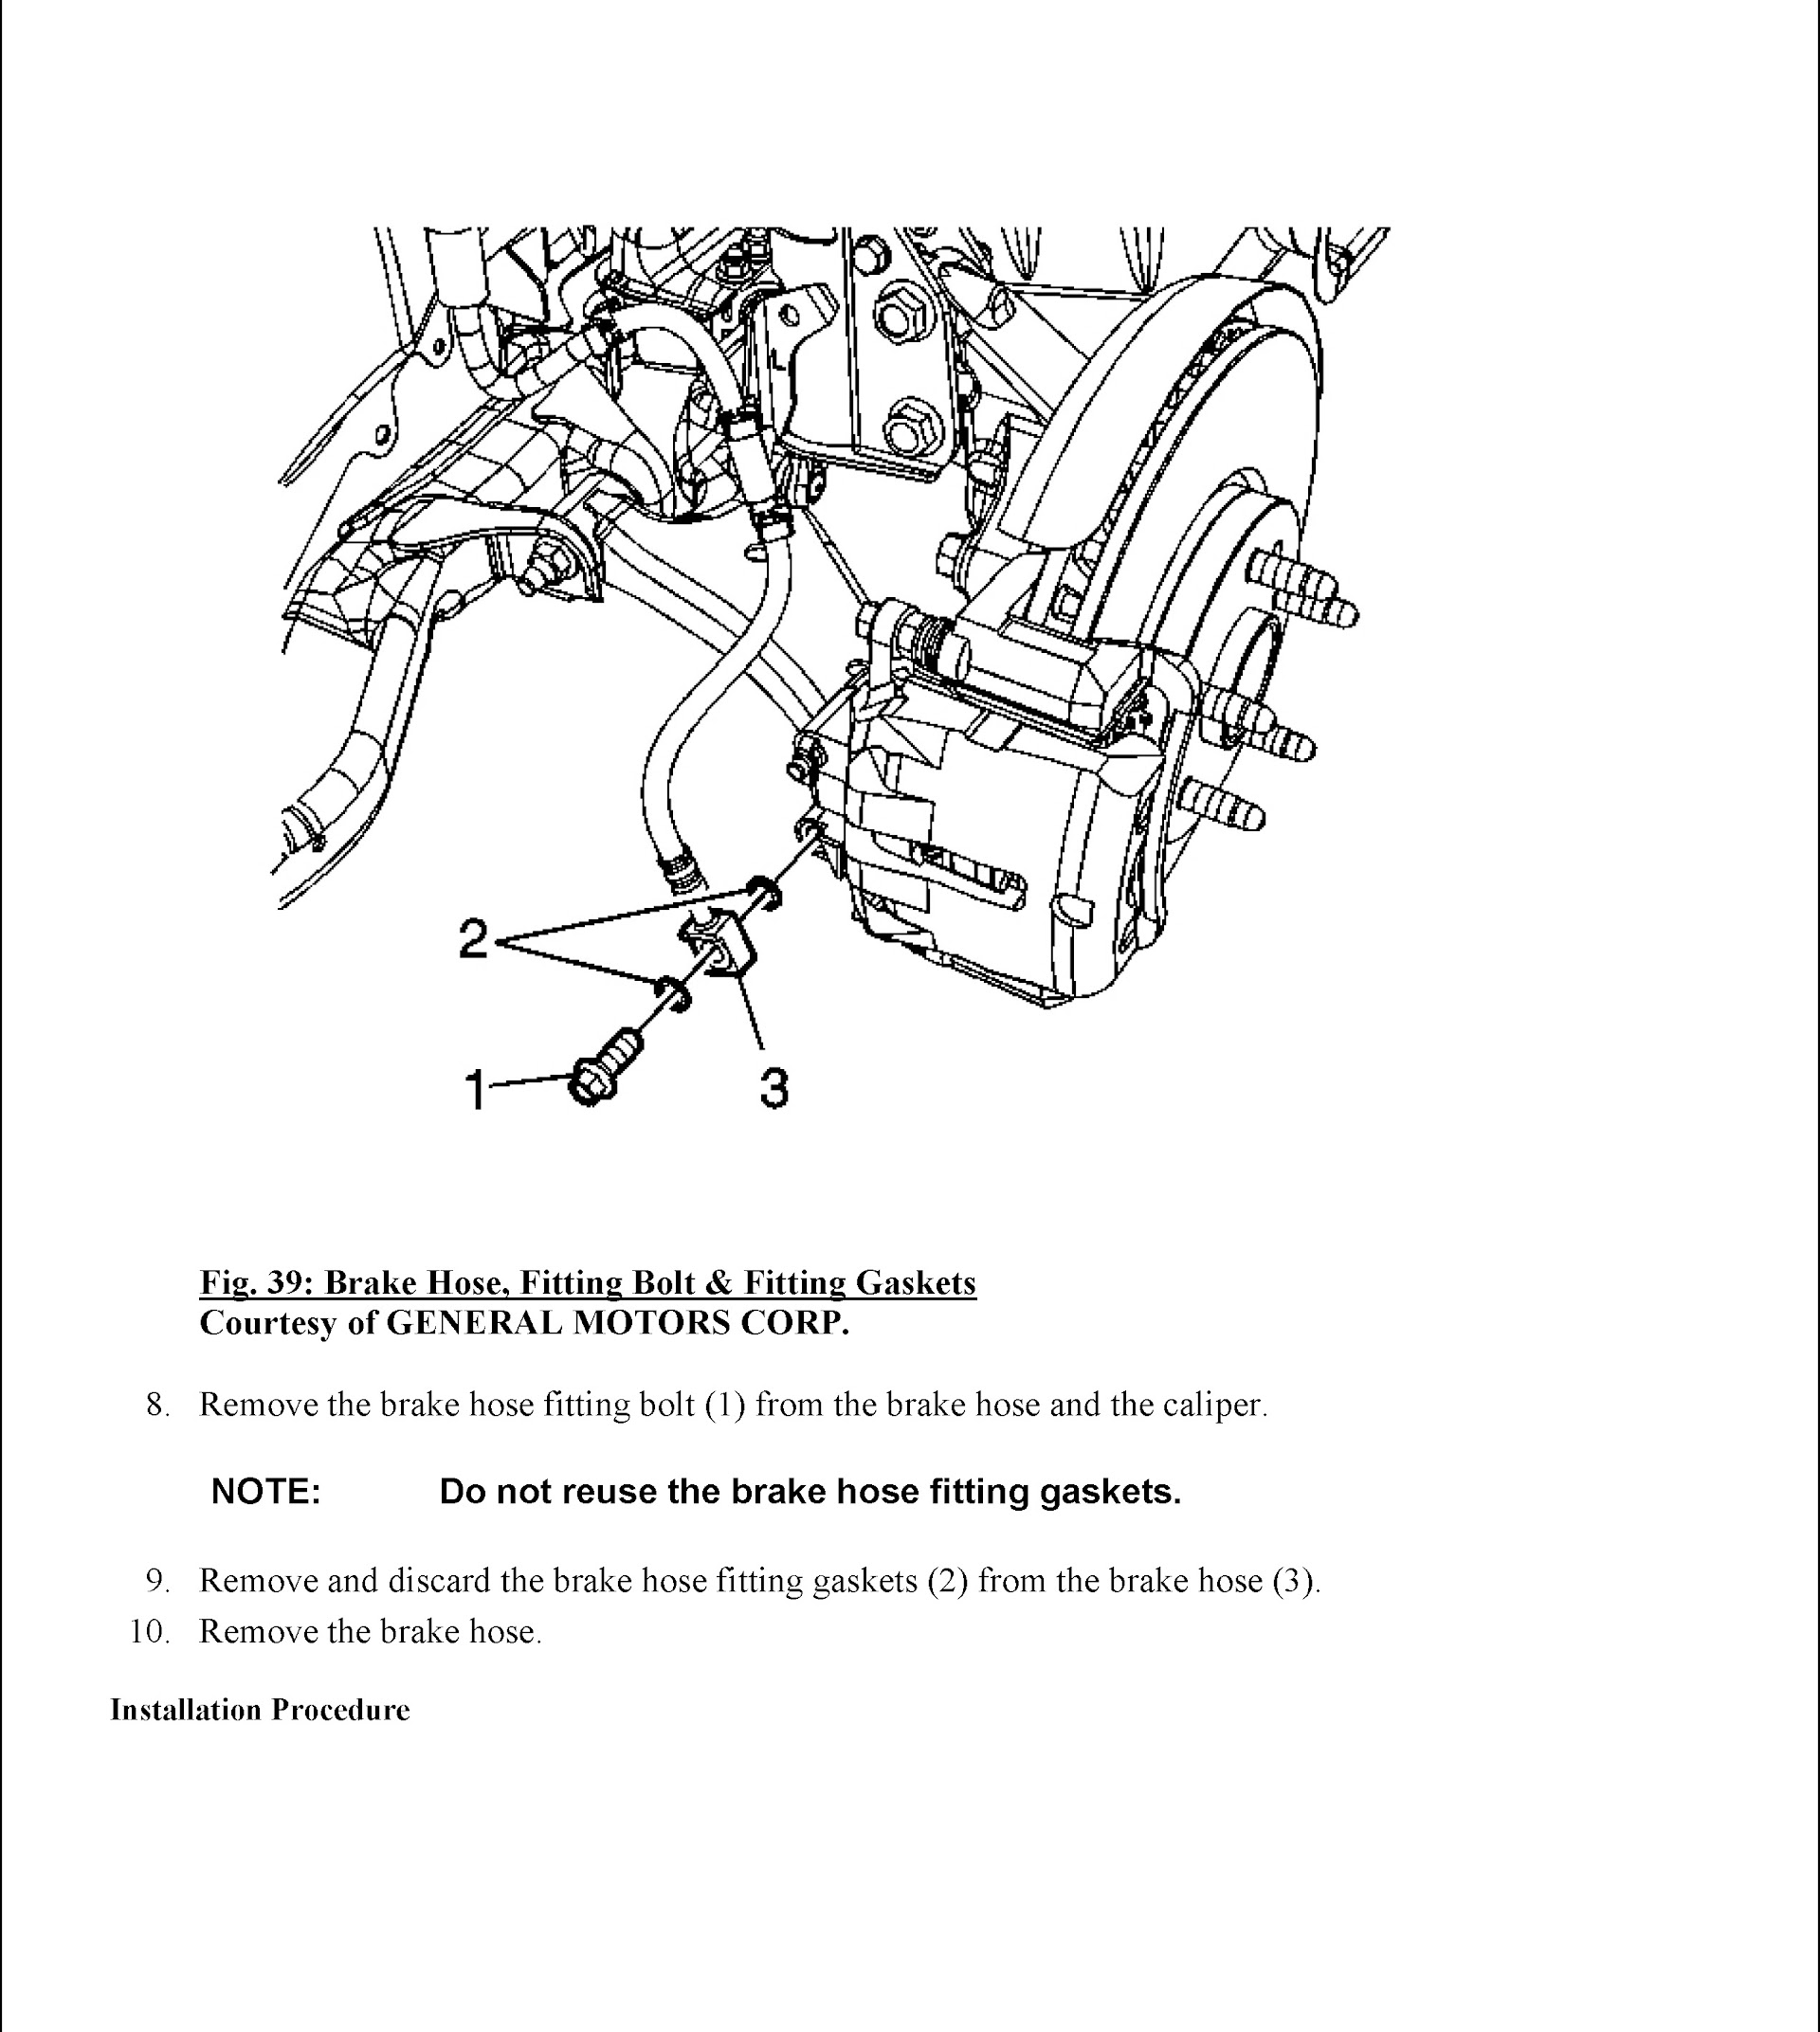 CONTENTS: 2010-2012 Chevrolet Equinox Repair Manual and GMC Terrain, Brake System